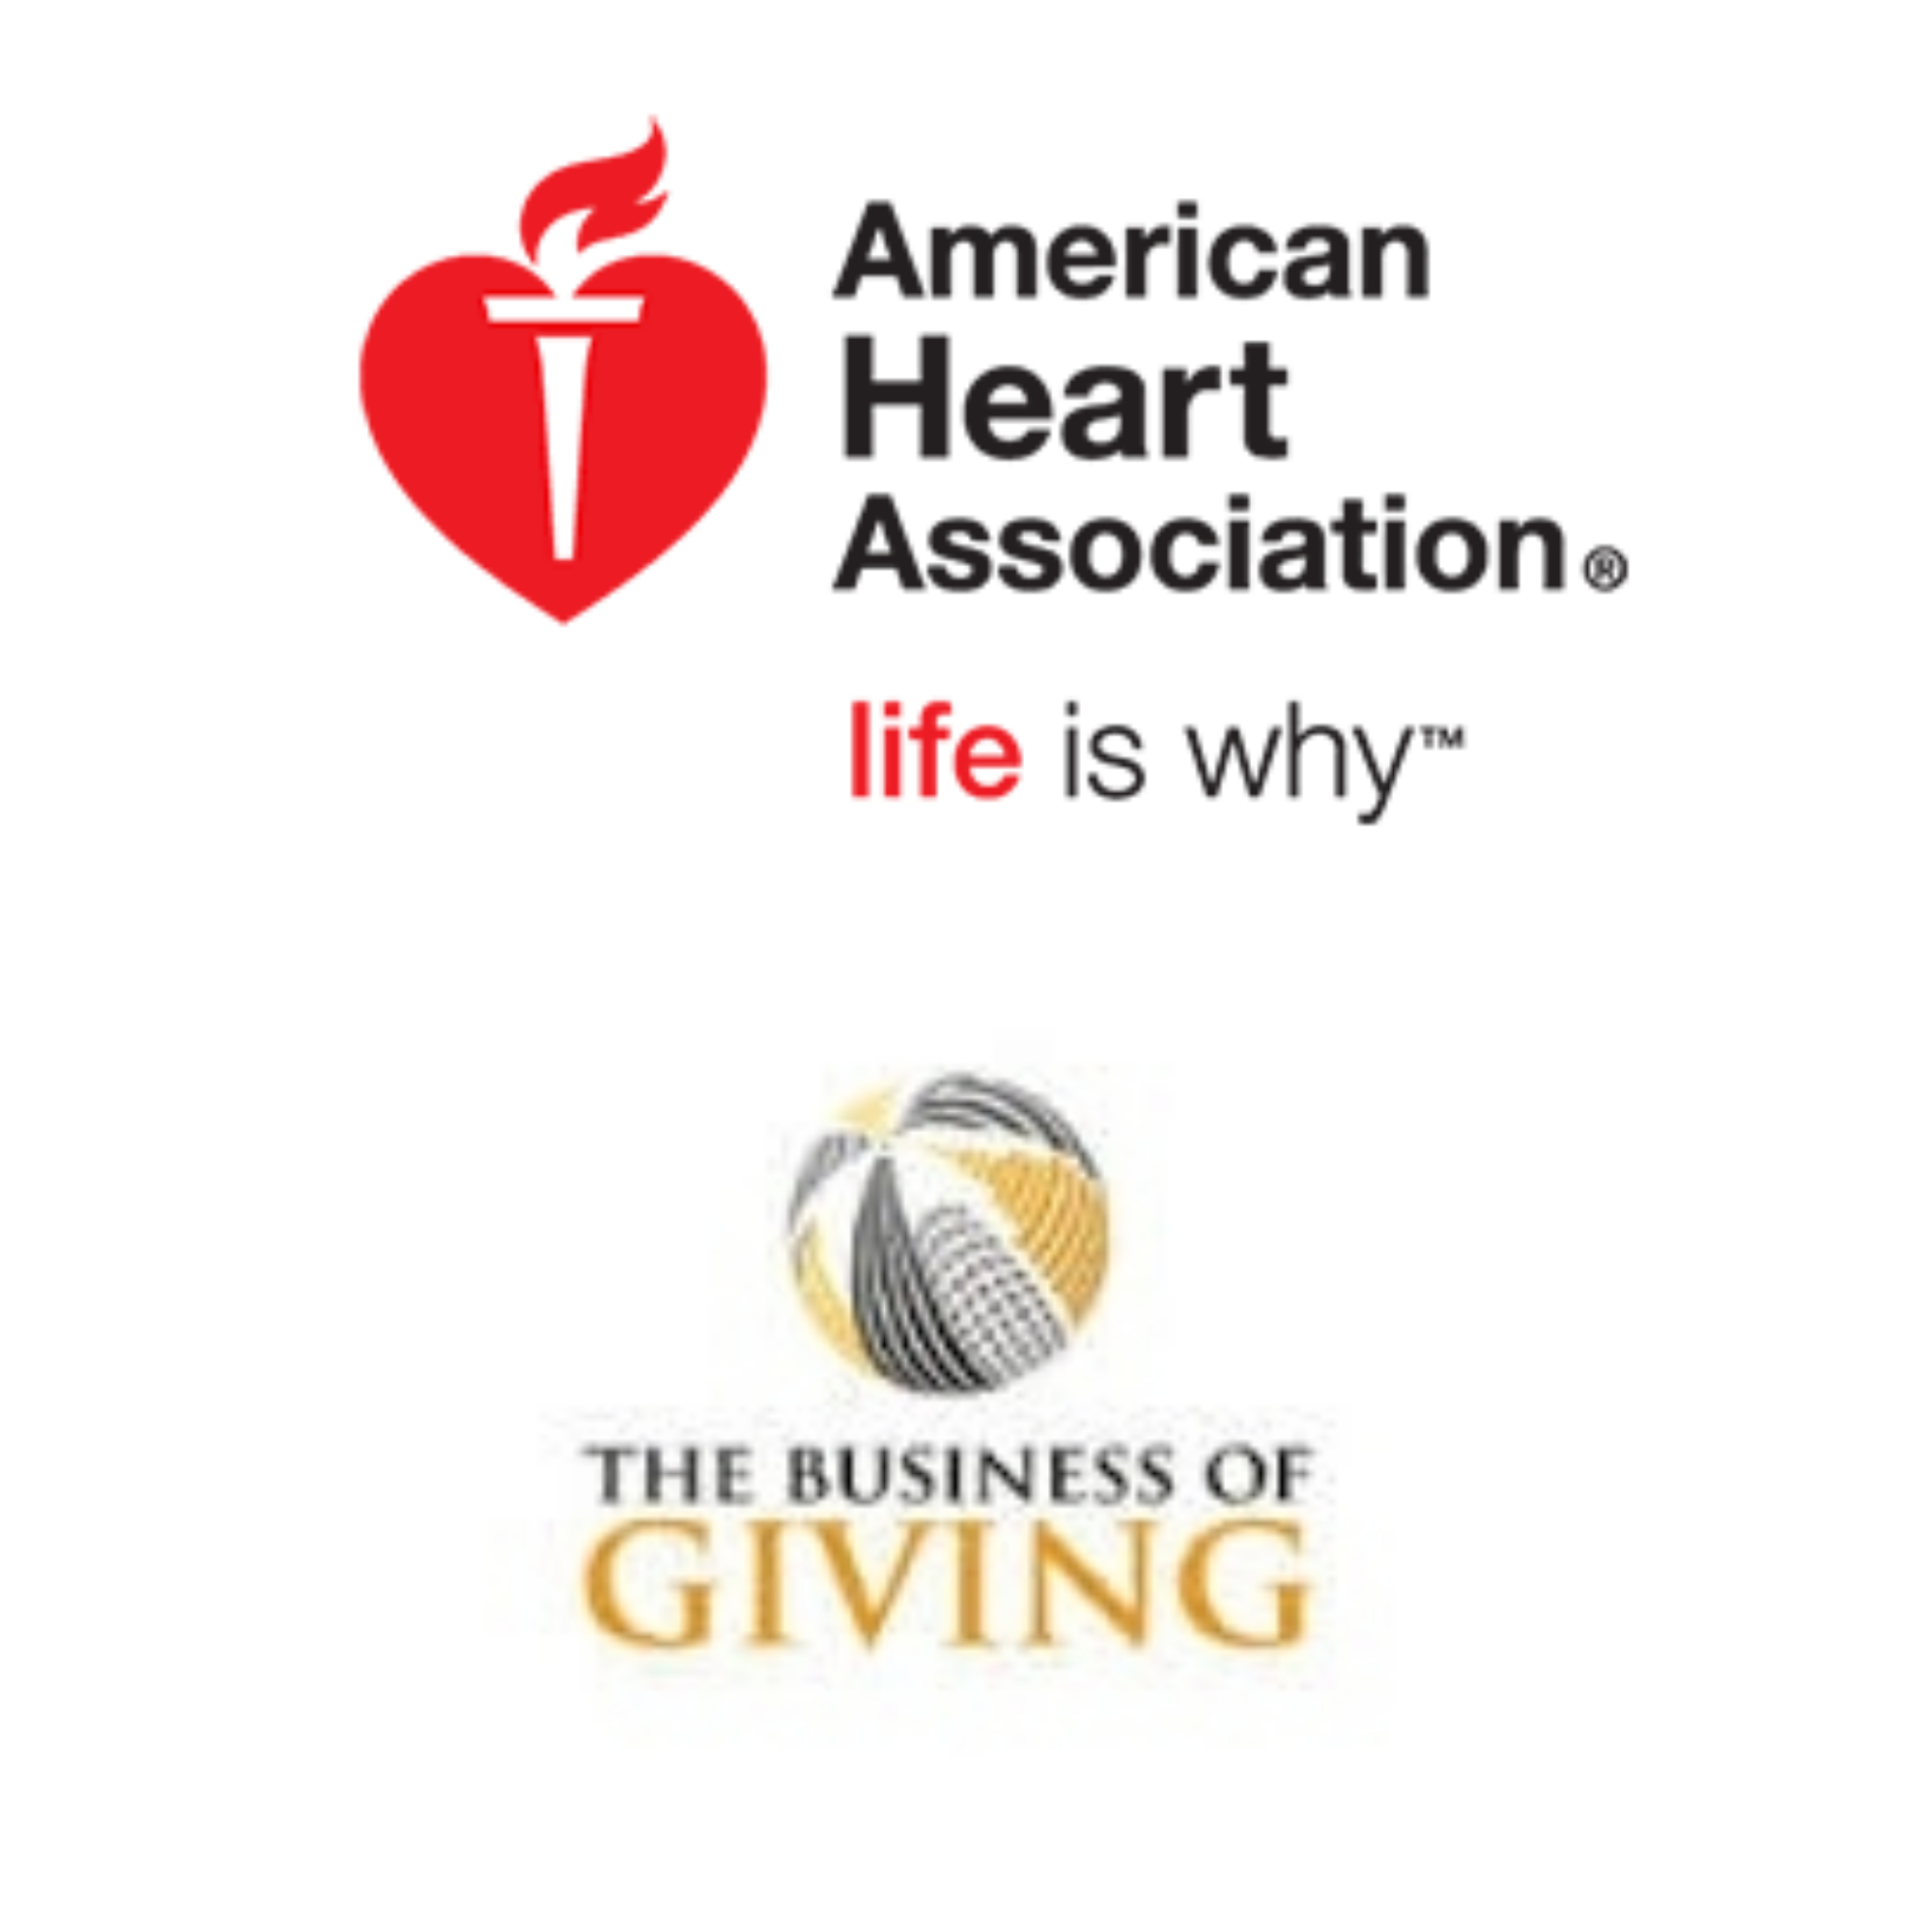 Better Than Most: The American Heart Association